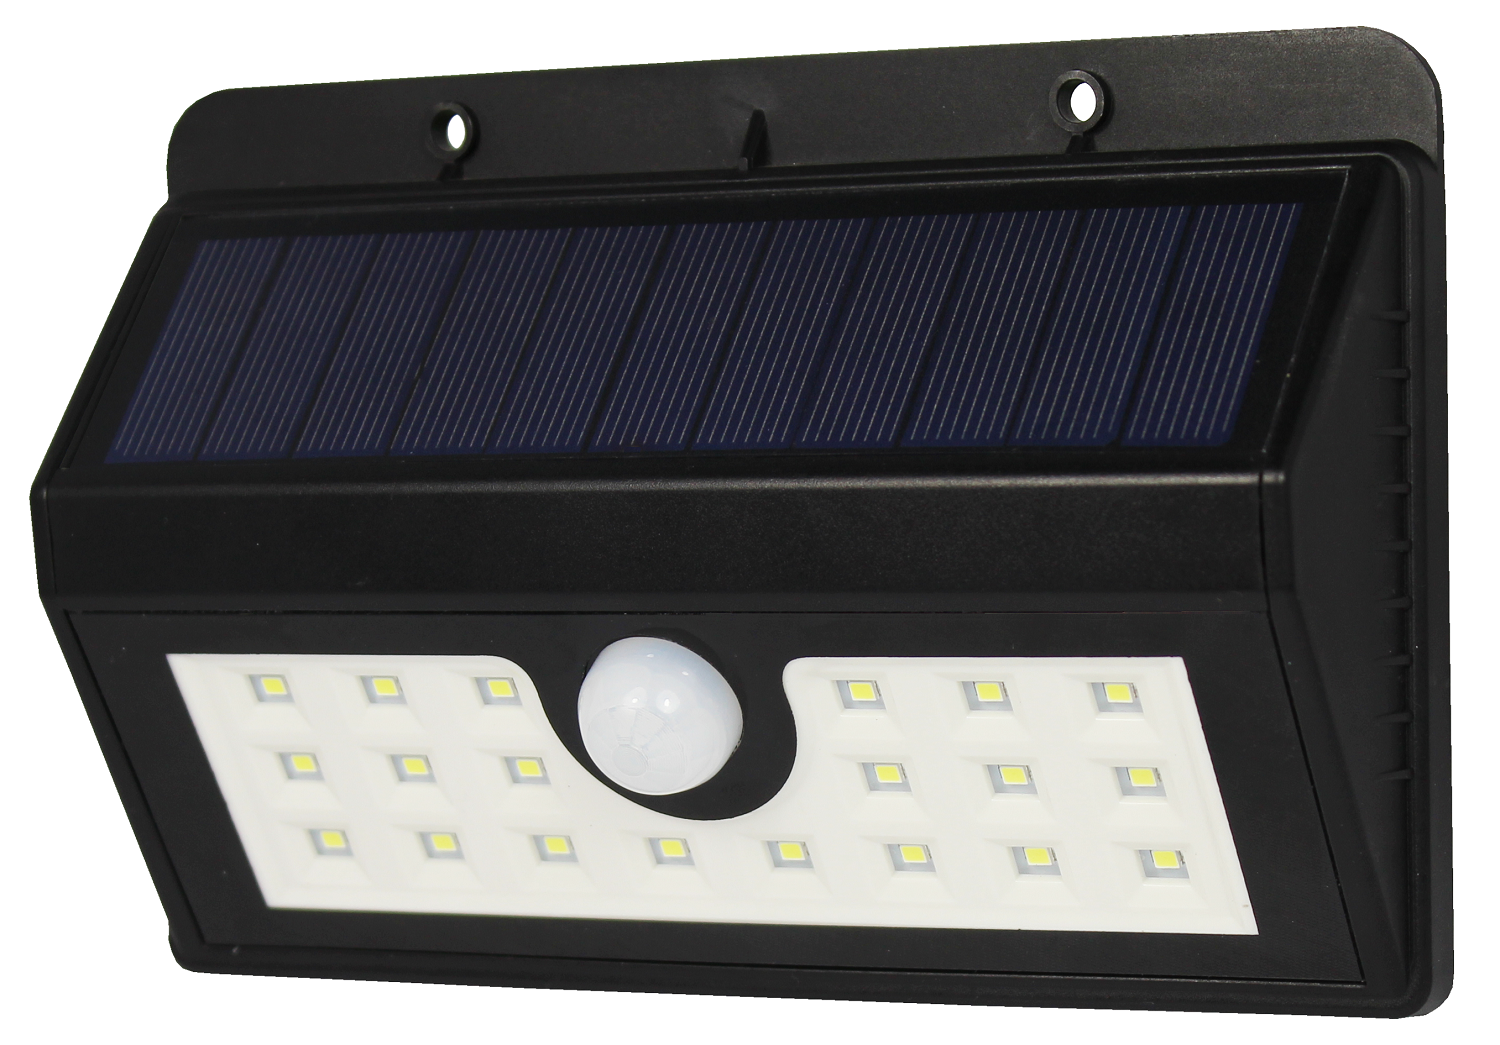 POWERplus Boa Solar - USB Powered PIR Sensor Outdoor Light